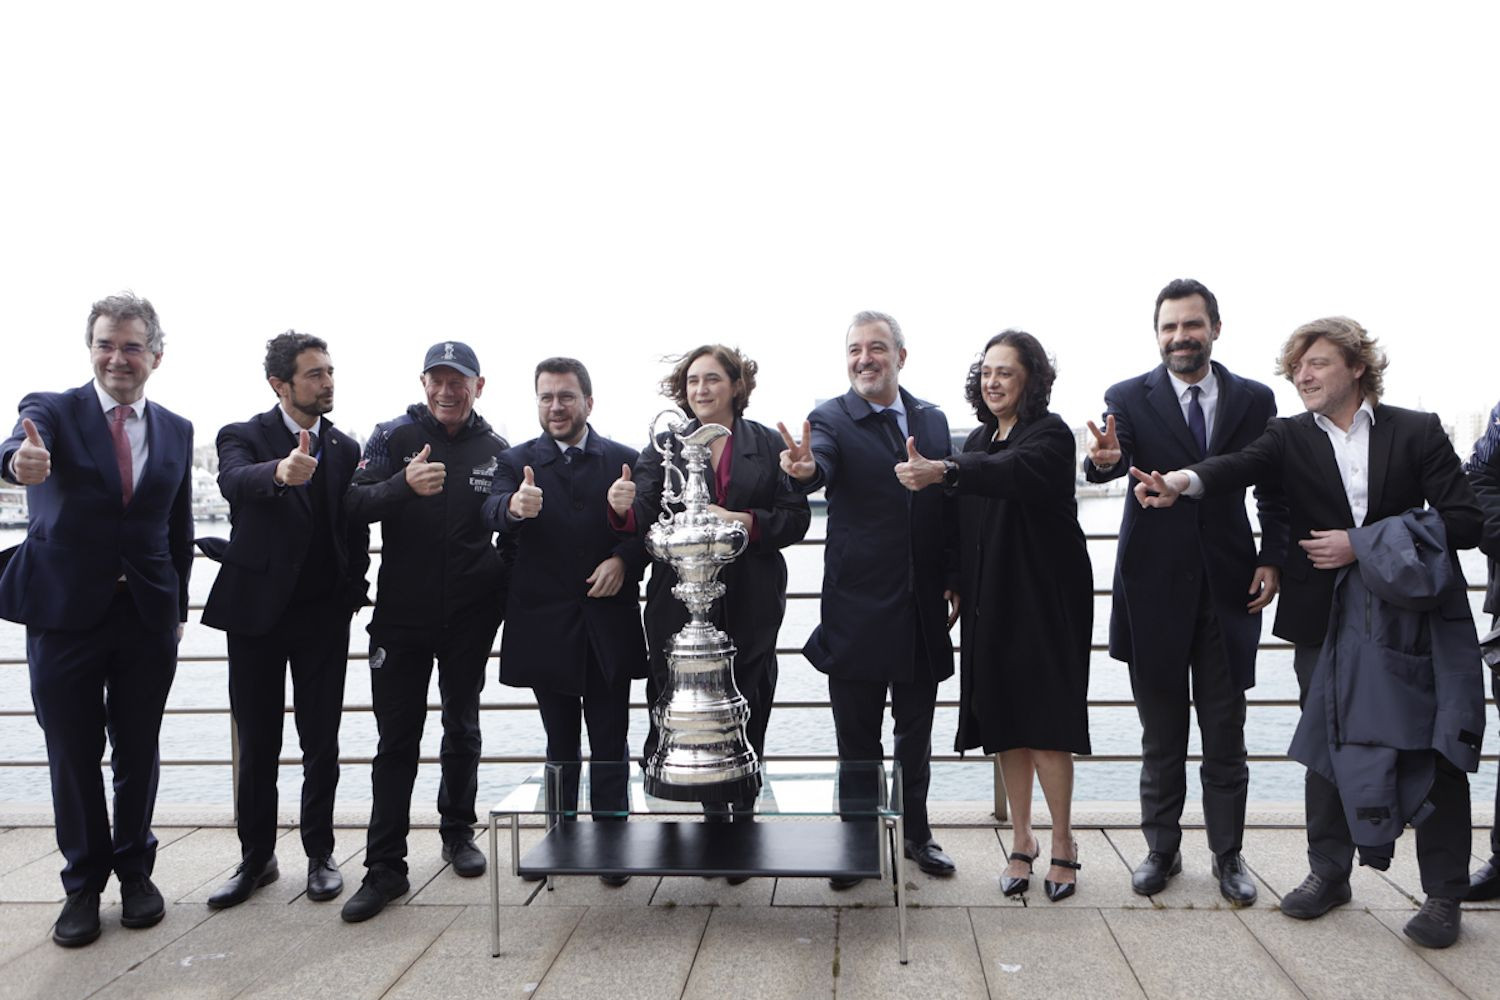 Pere Aragonès, Ada Colau, Grant Dalton y Jaume Collboni, entre otros, posan con el trofeo de la Copa del América de Vela / EFE